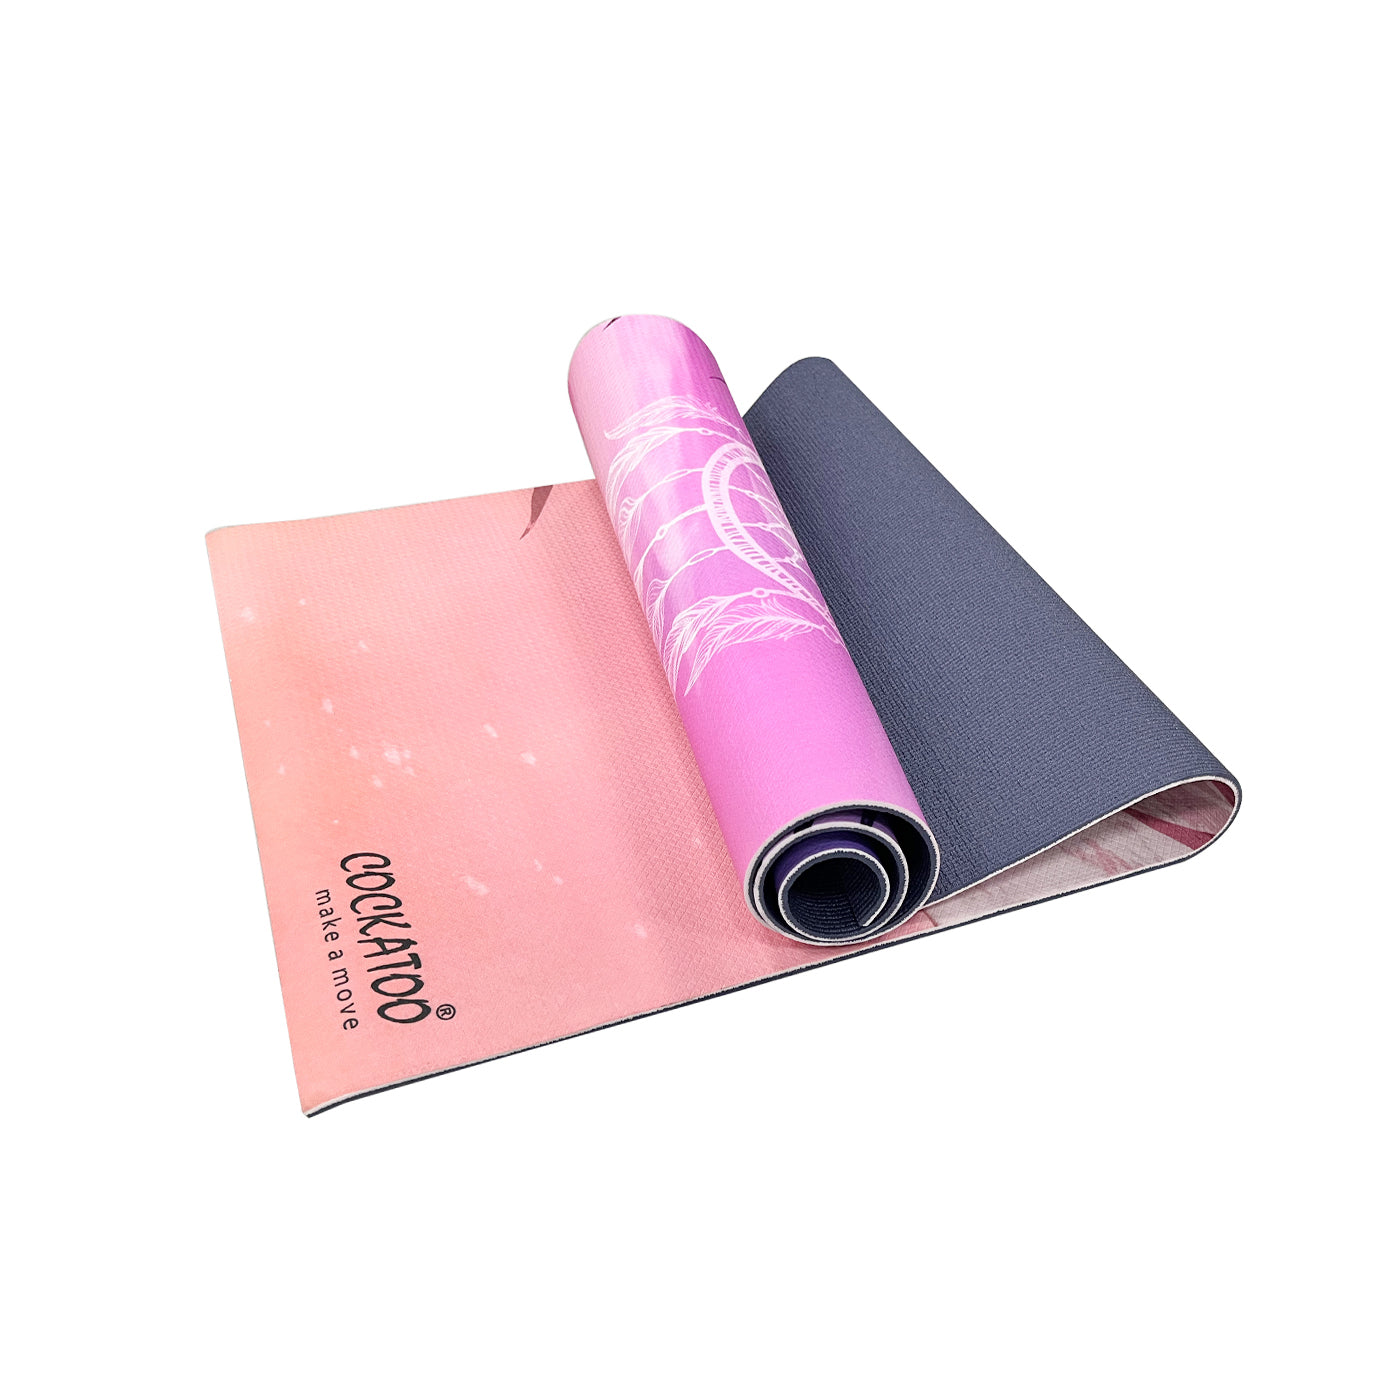 Cockatoo Printed Yoga Mat - 5mm Anti-Slip PVC Exercise Mat with Carrying Strap (W)61 x (L)173cm - 3 Unique Creative Prints